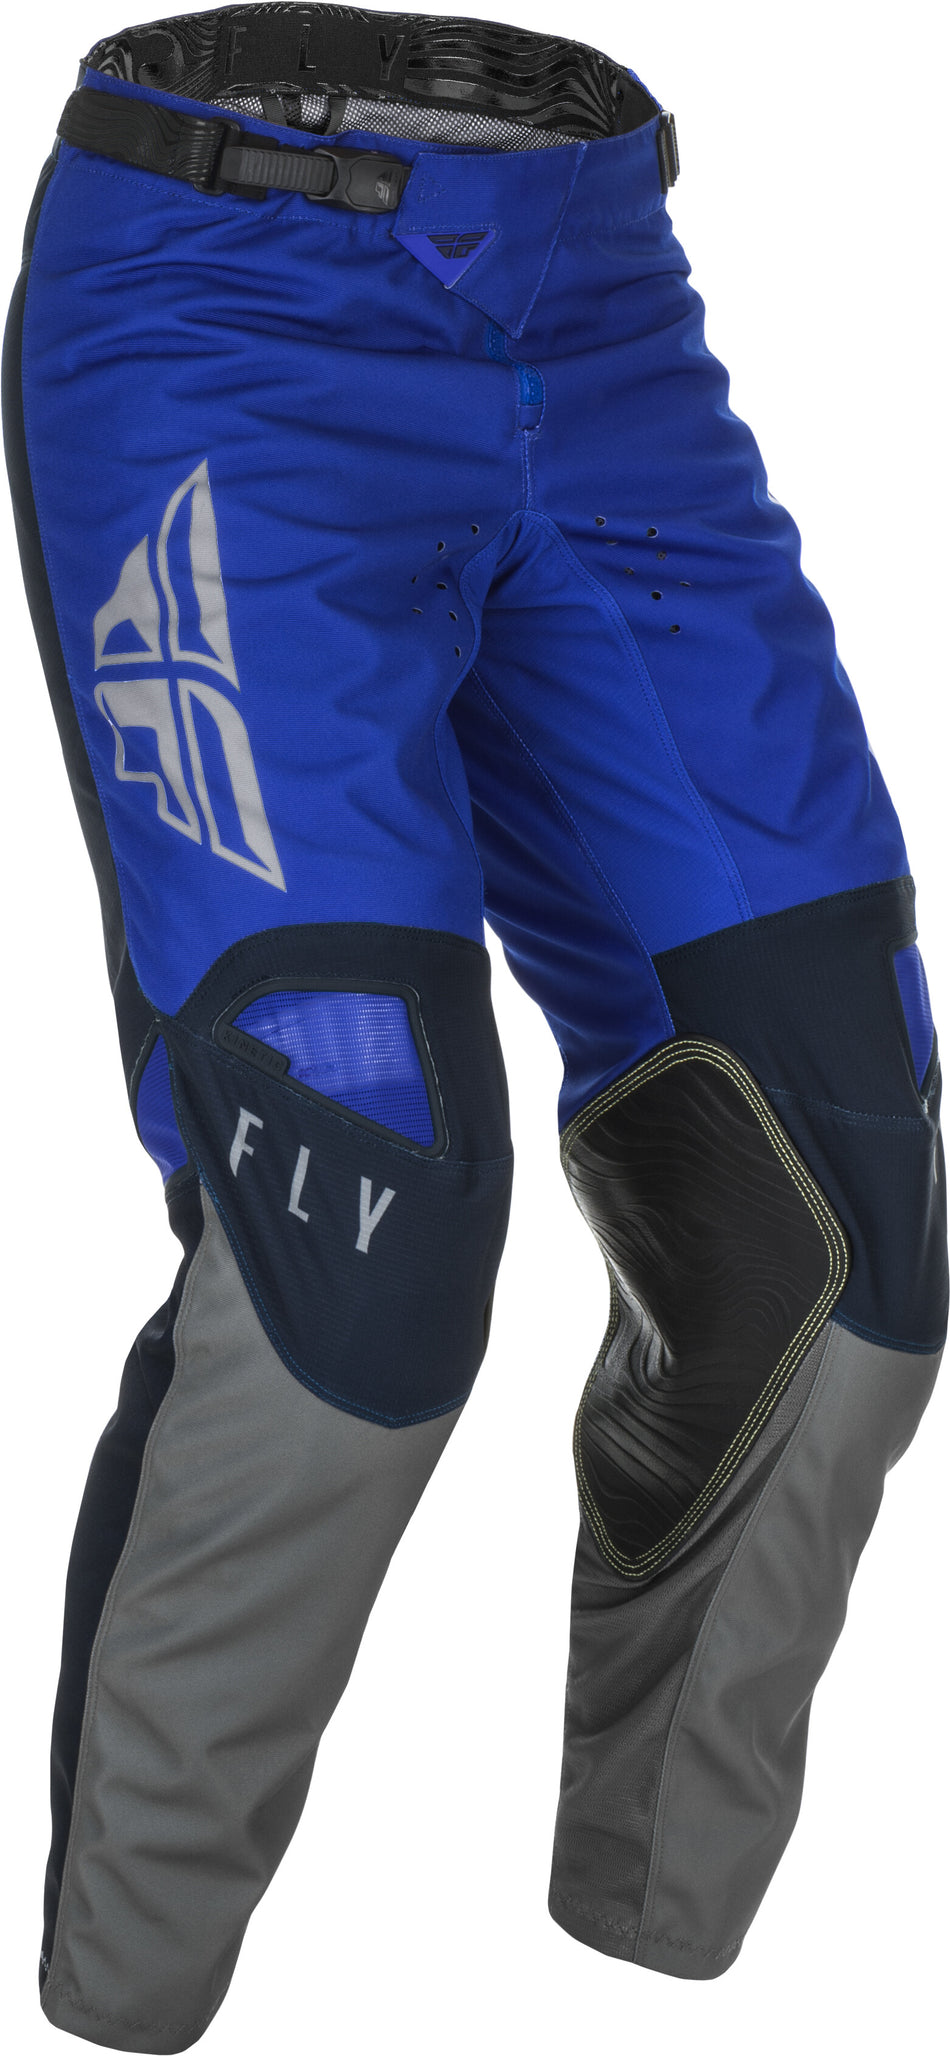 FLY RACING Youth Kinetic K121 Pants Blue/Navy/Grey Sz 24 374-43124